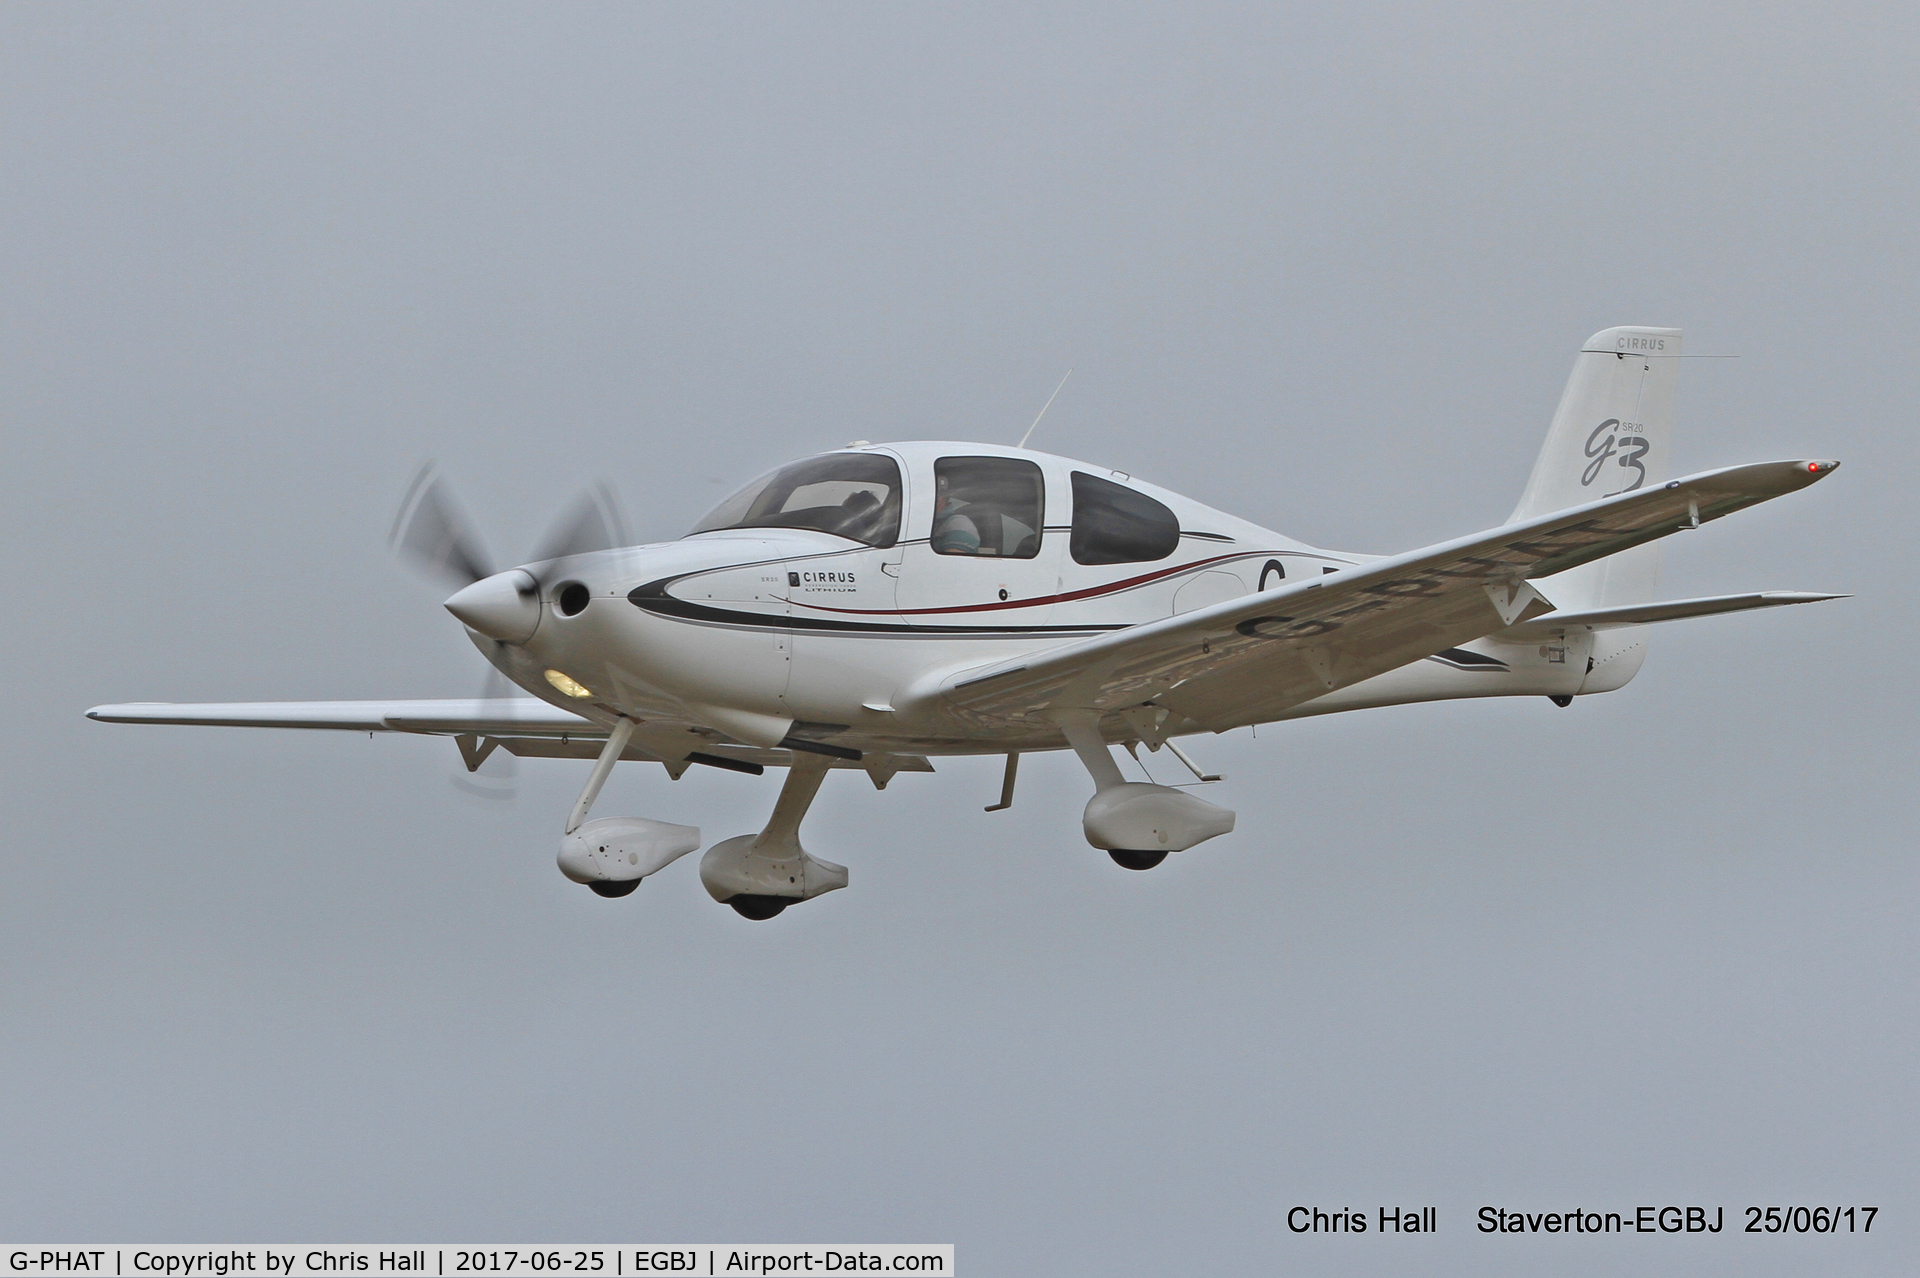 G-PHAT, 2008 Cirrus SR20 G3 C/N 1999, Project Propeller at Staverton